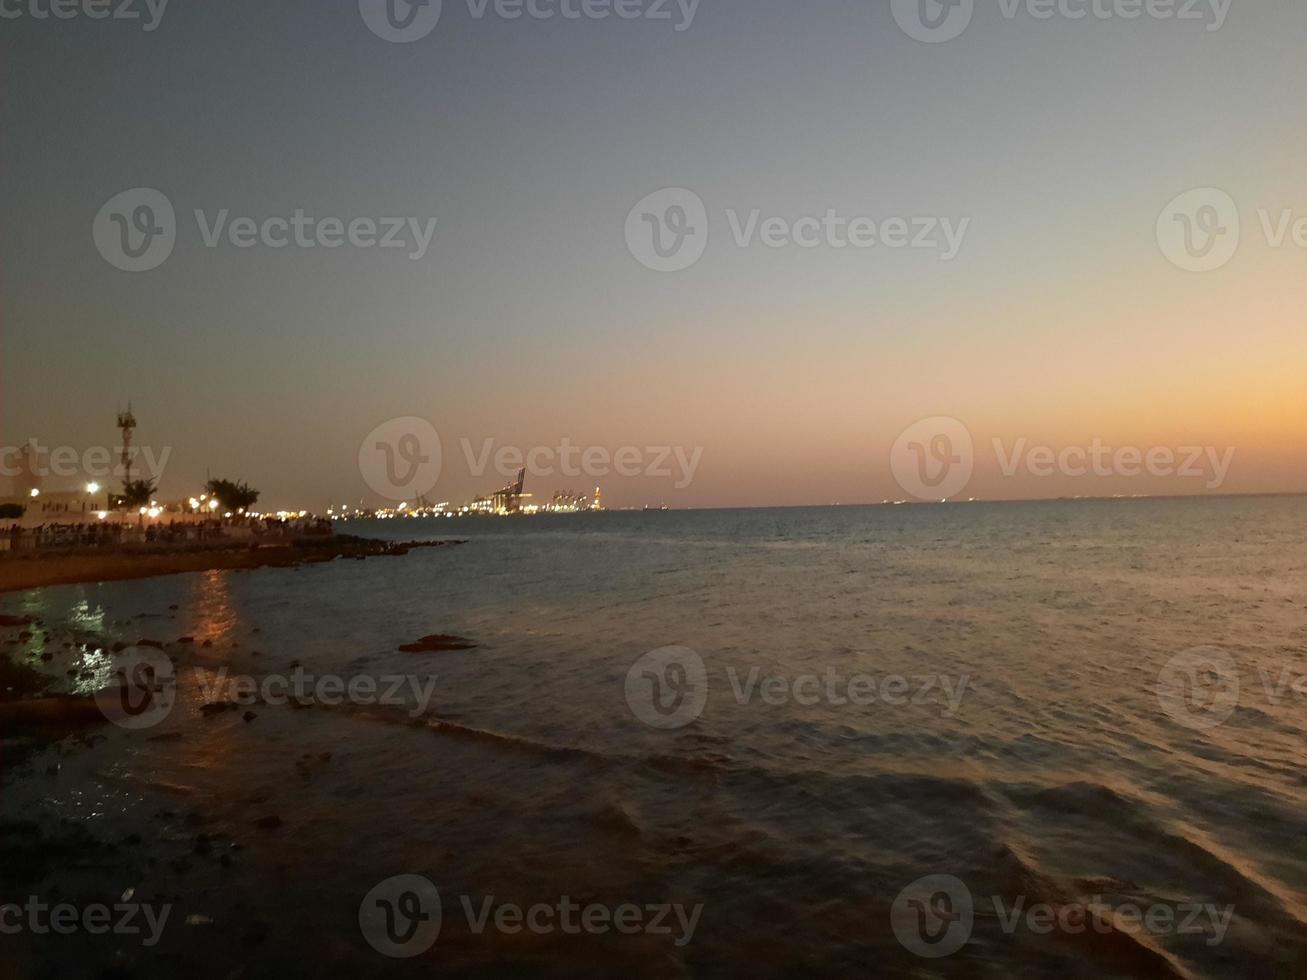 mooi avond en kleurrijk zonsondergang Bij jeddah corniche. foto